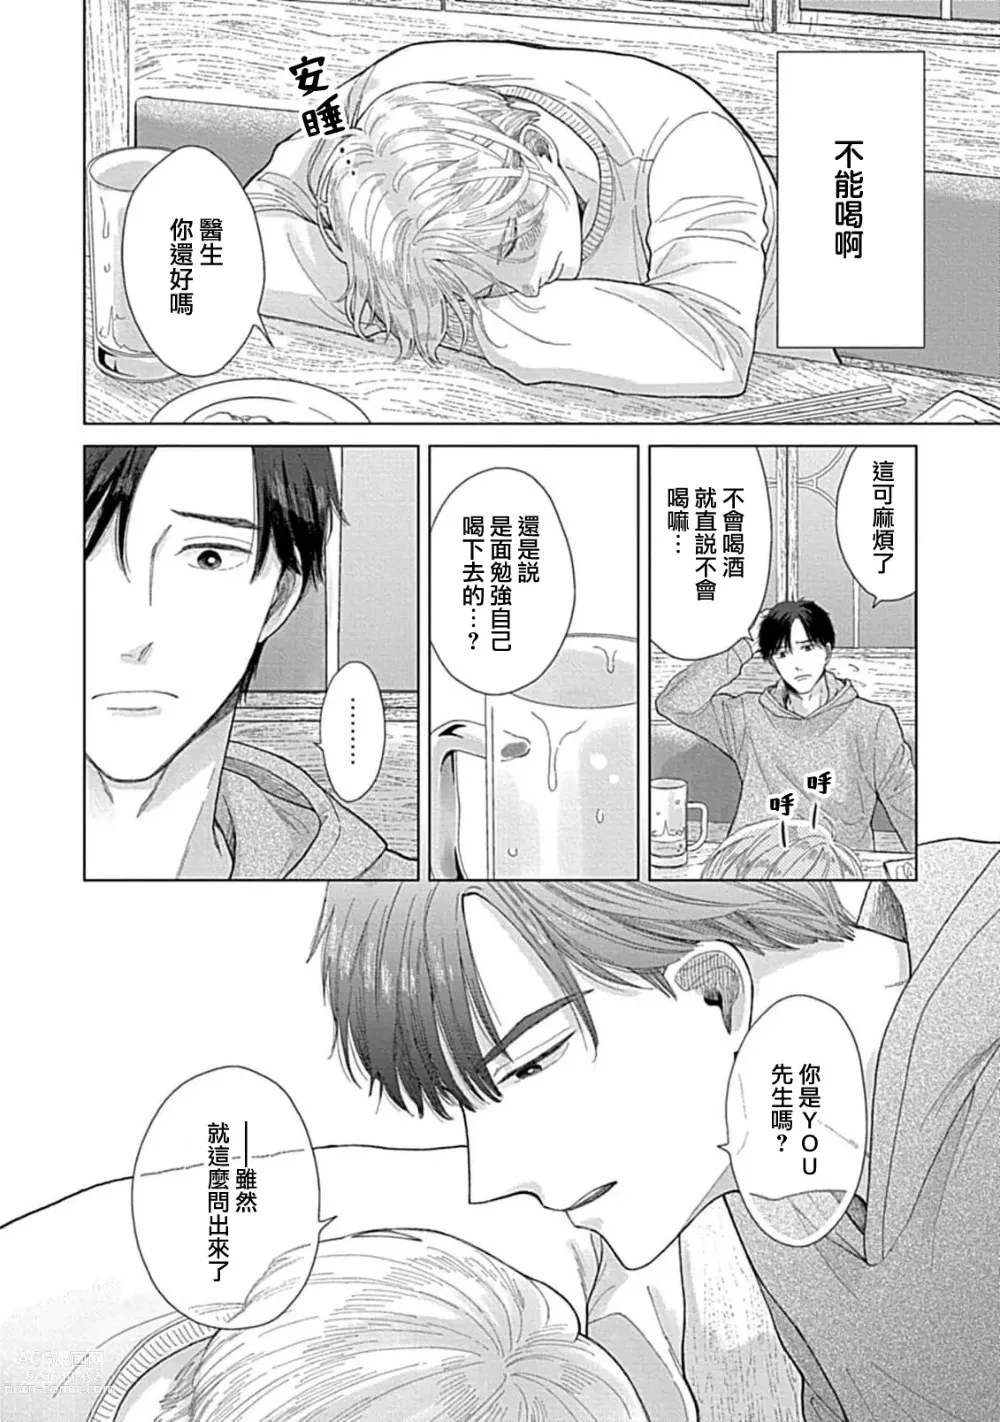 Page 22 of manga 并非不喜但请抱紧1